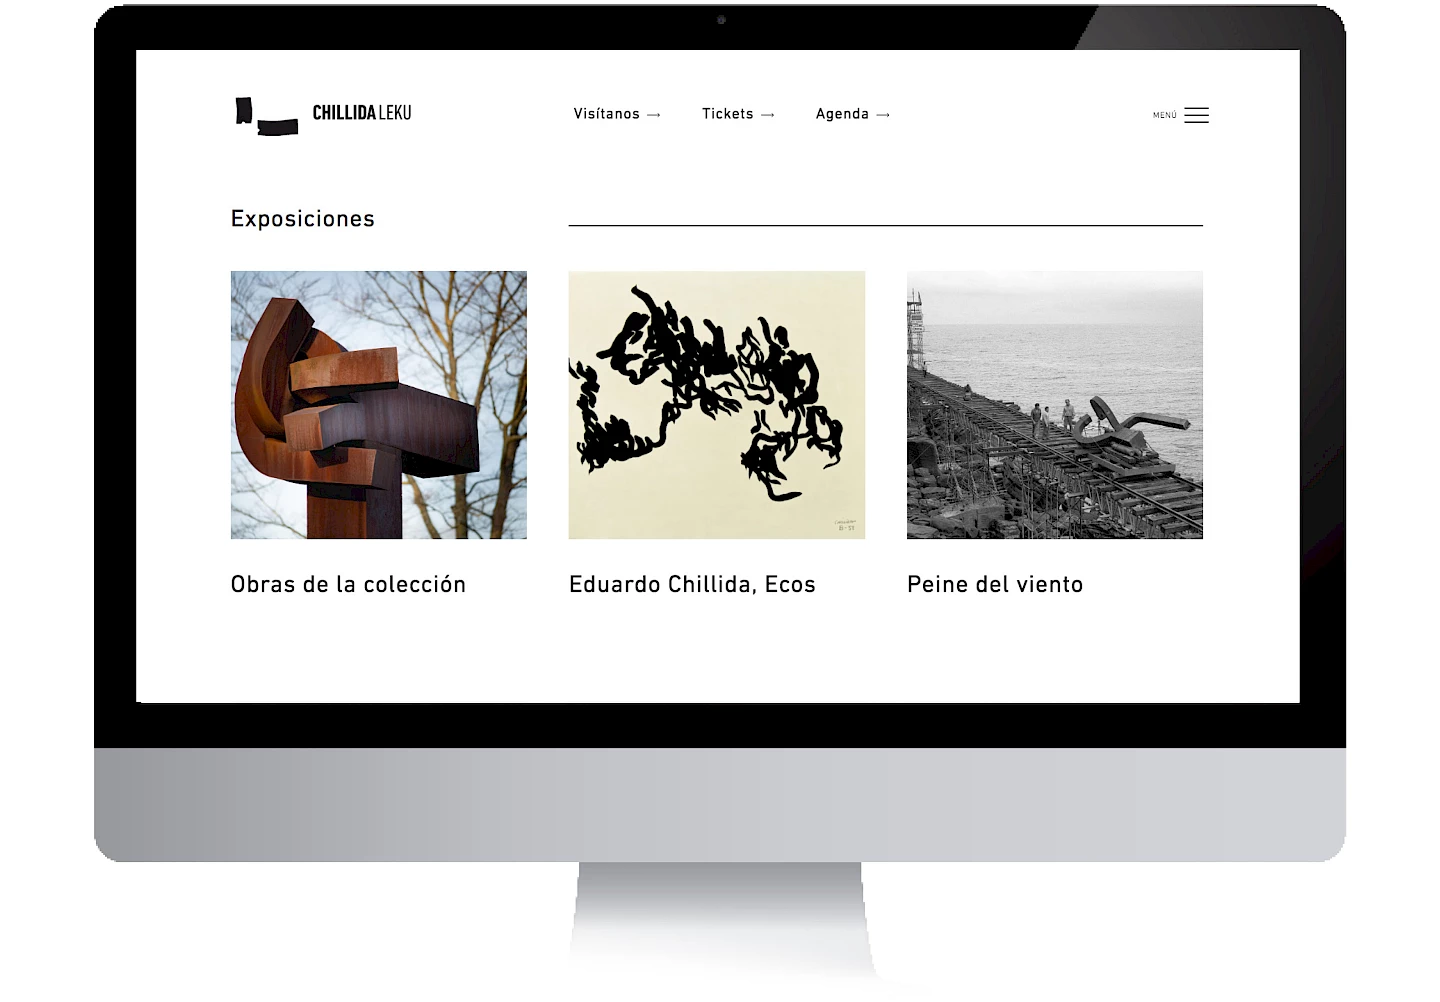 03 move culture museo branding social website chillida media leku digital 